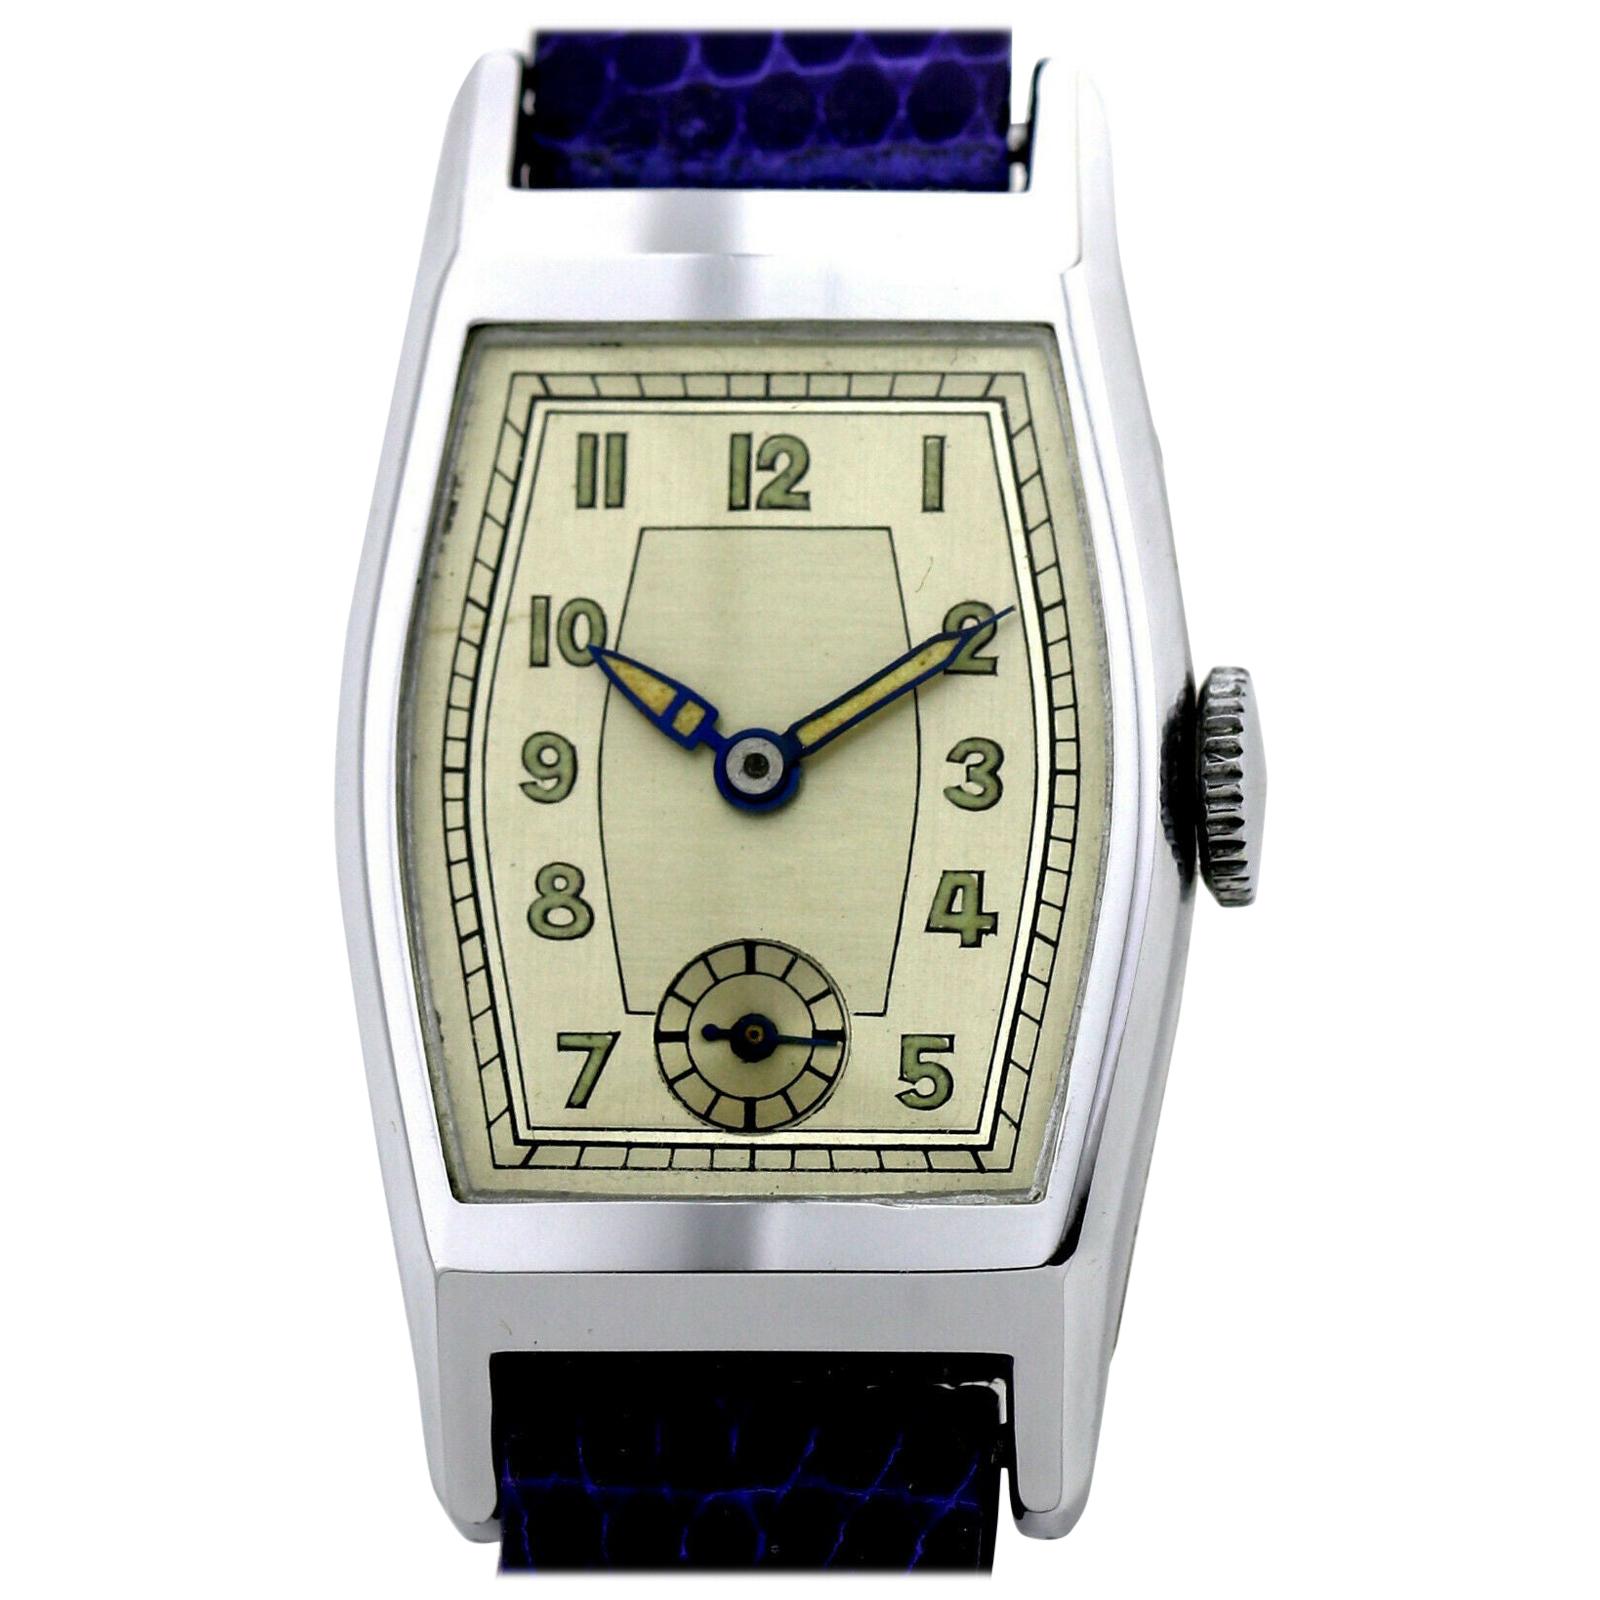 Stylish Art Deco Gents Wristwatch Old Stock, Never Worn, circa 1930